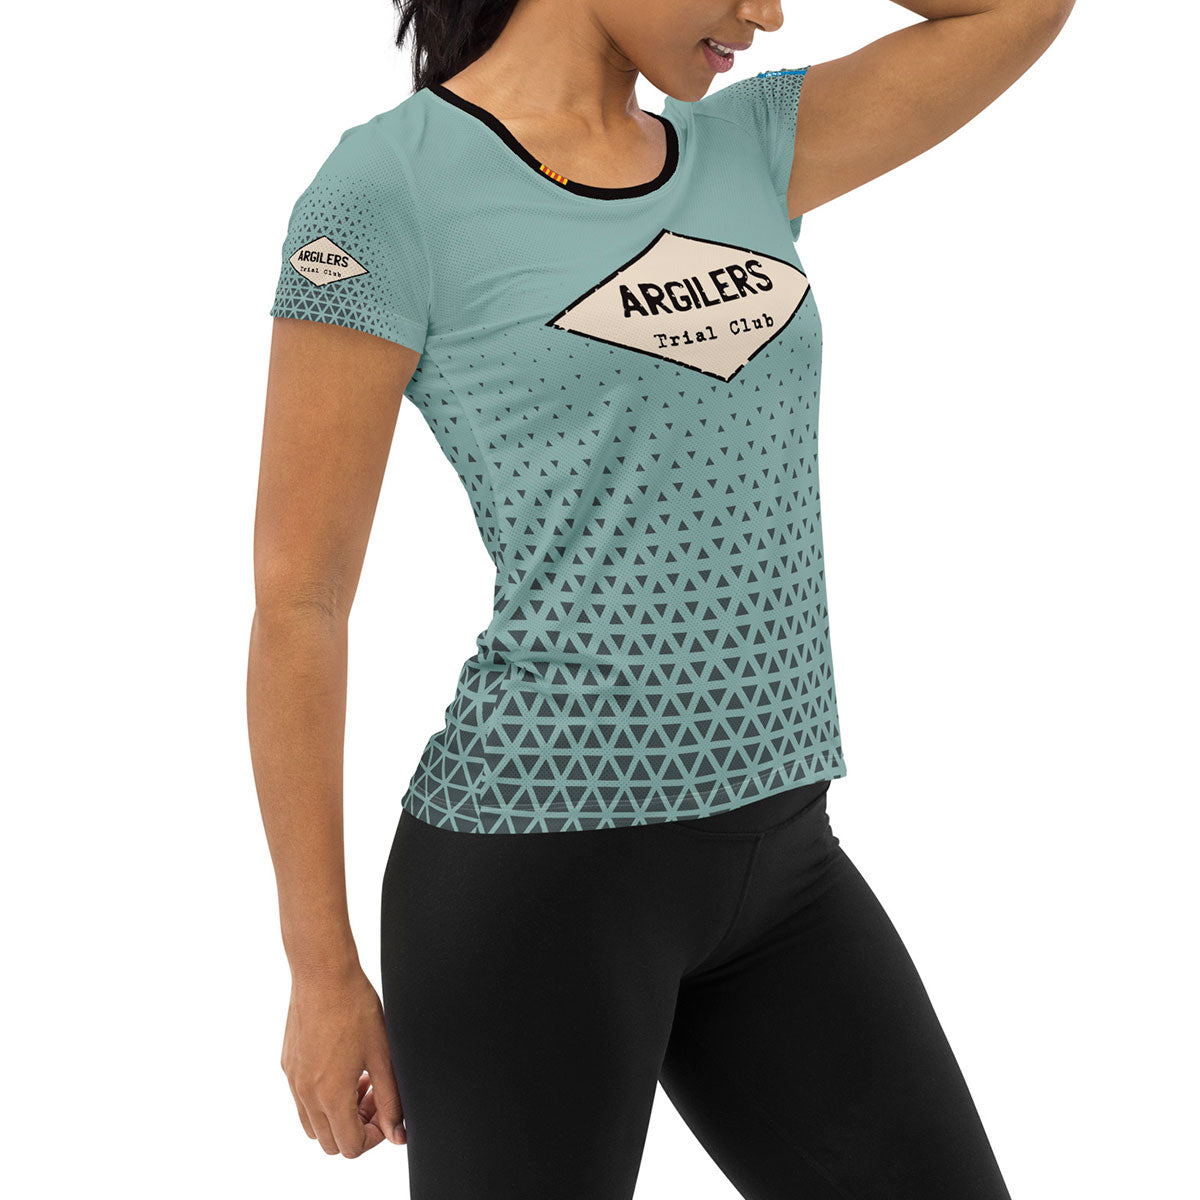 ARGILERS TRIAL CLUB · Camiseta deportiva m/corta·Mujer · Premium·Full Print-271x2ipi